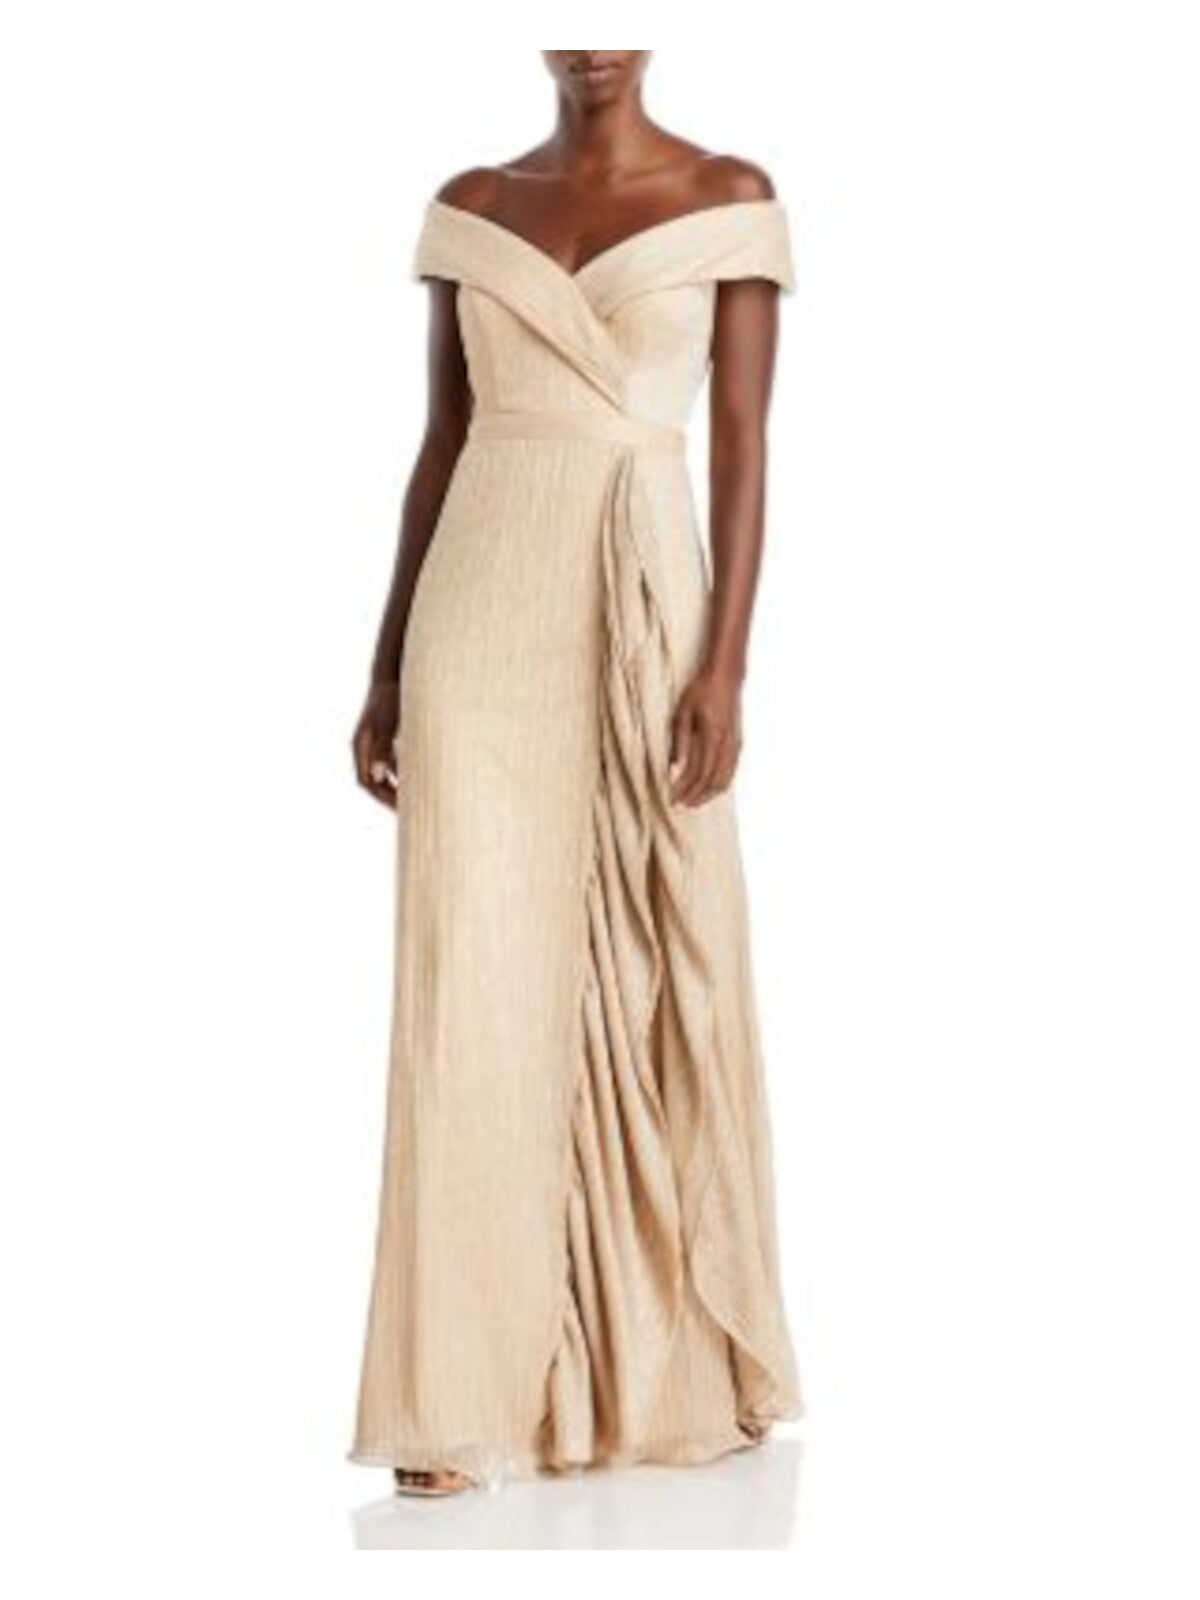 AQUA FORMAL Womens Gold Ruffled Zippered Lined Short Sleeve Off Shoulder Full-Length Evening Gown Dress 0